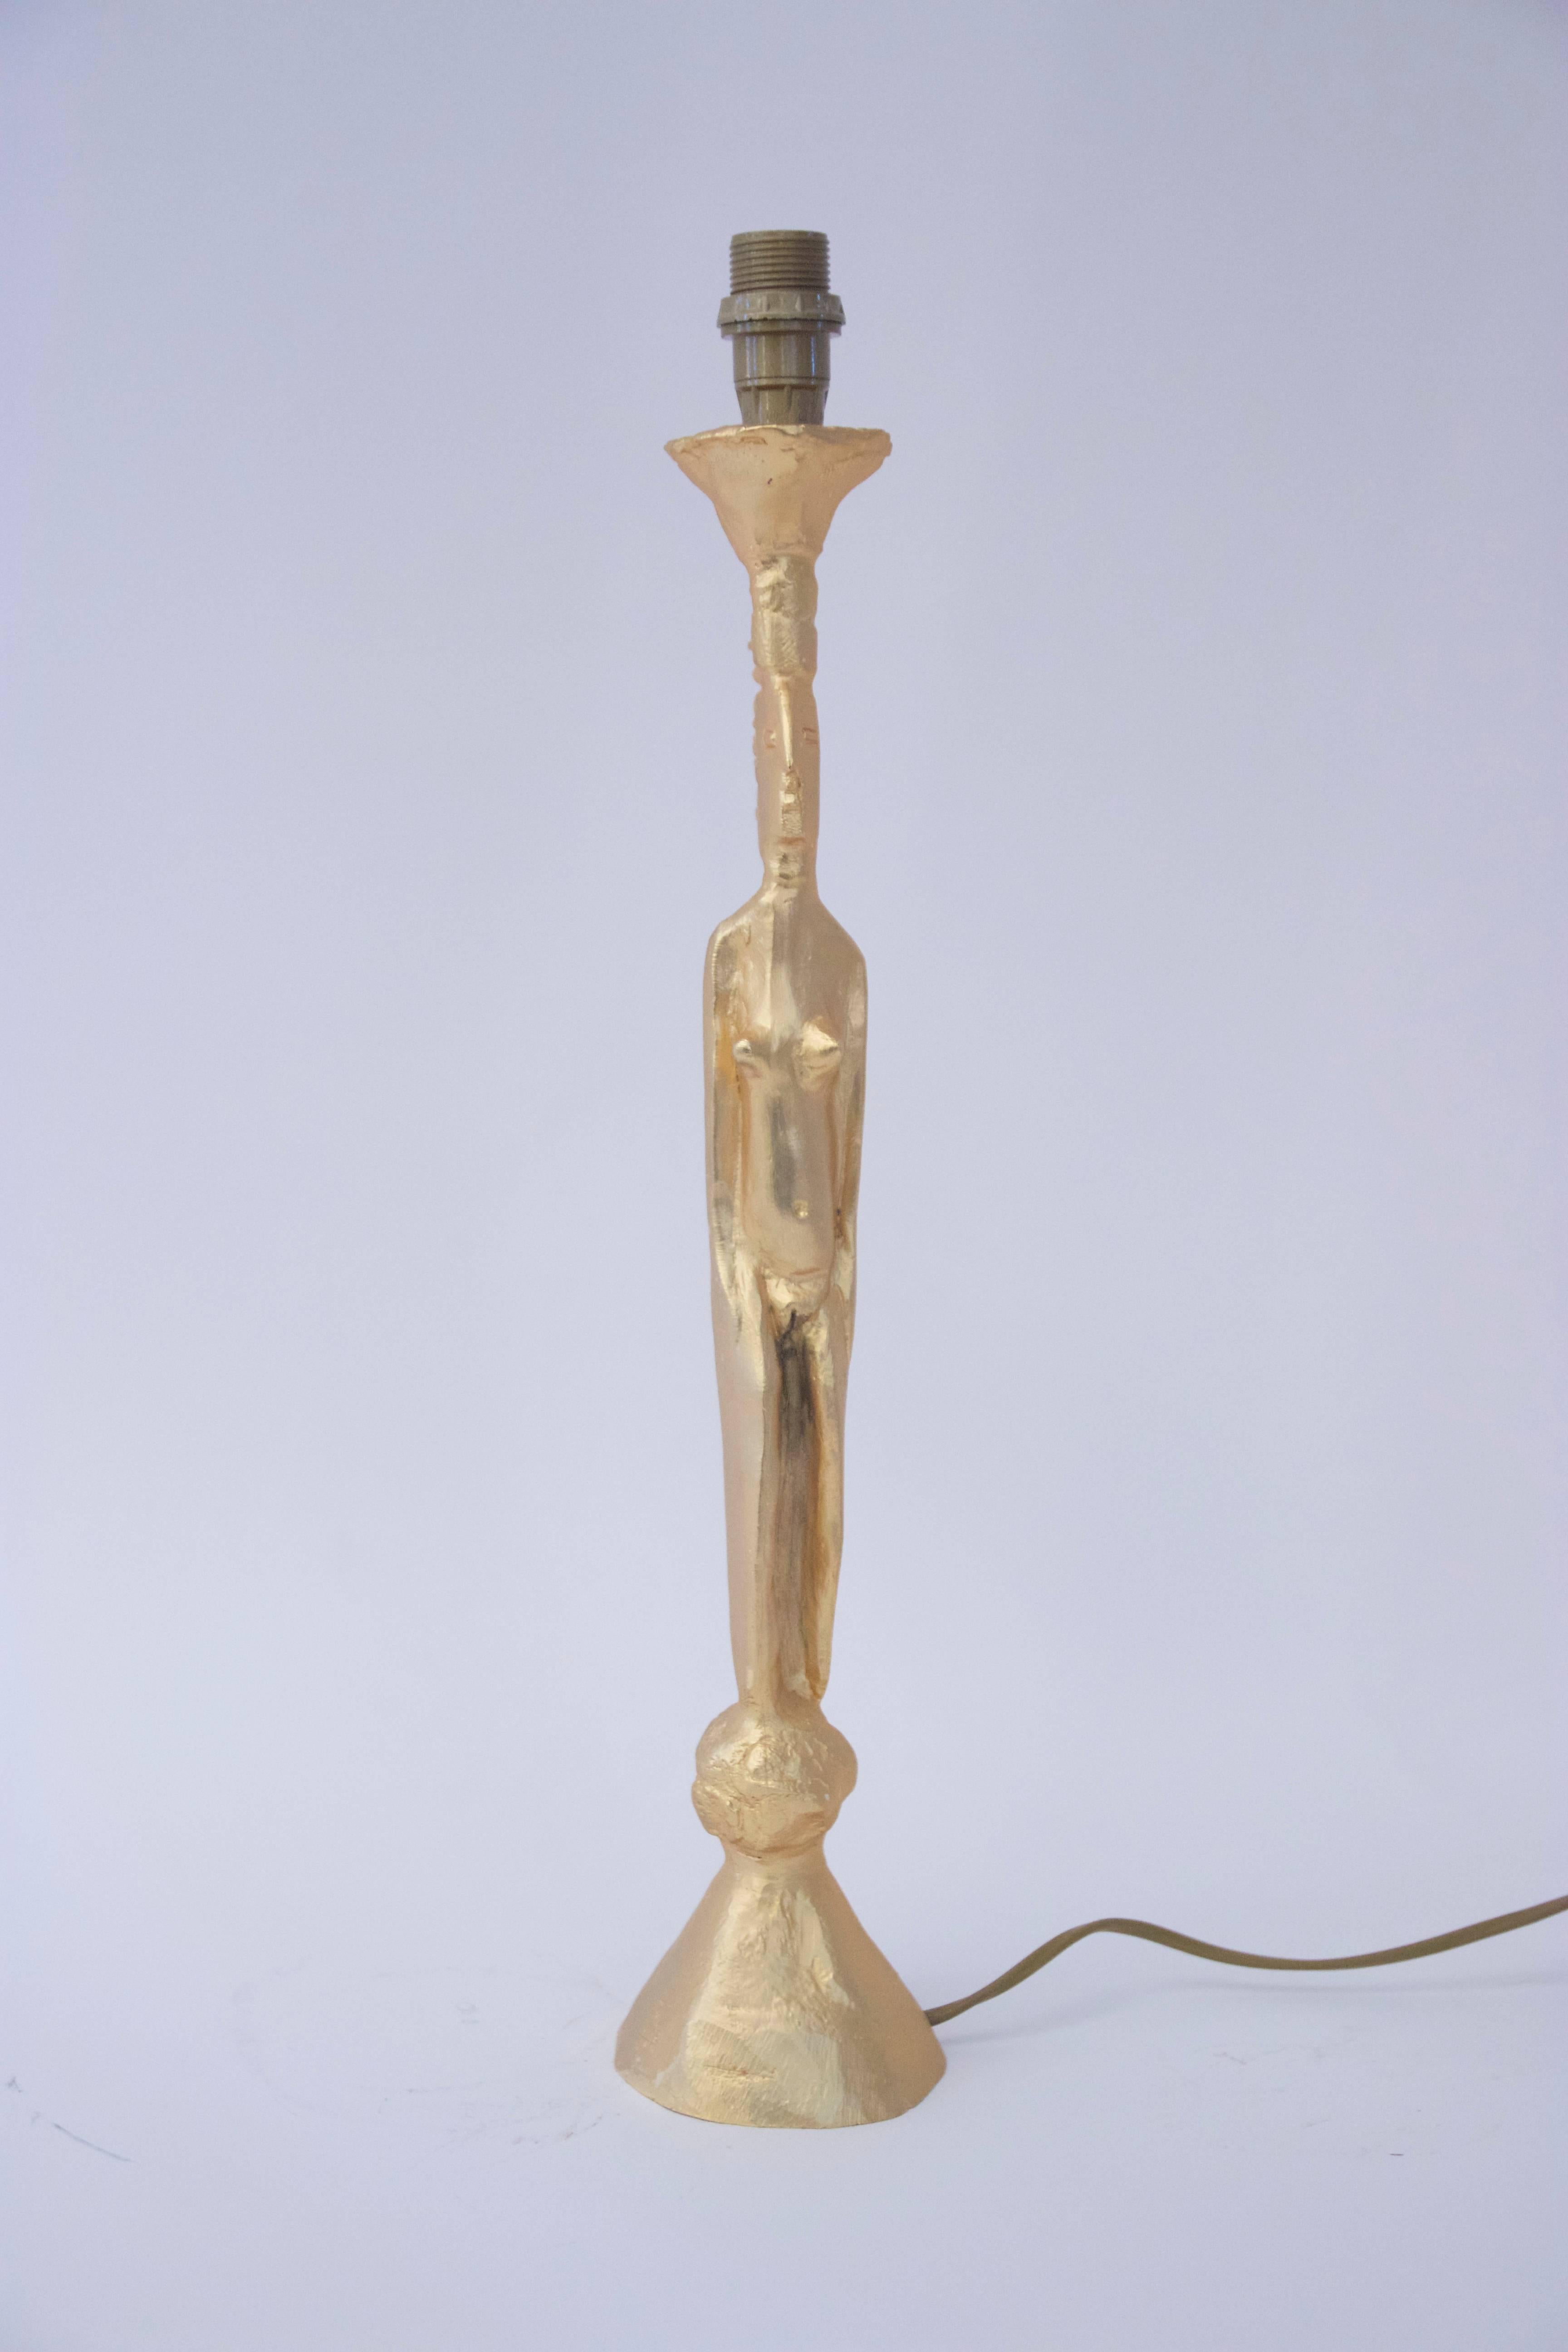 Pierre Casenove,
TOTEM table lamp,
gilded bronze,
circa 1970, France.
Measures: Height 55 cm, diameter 10 cm.
  